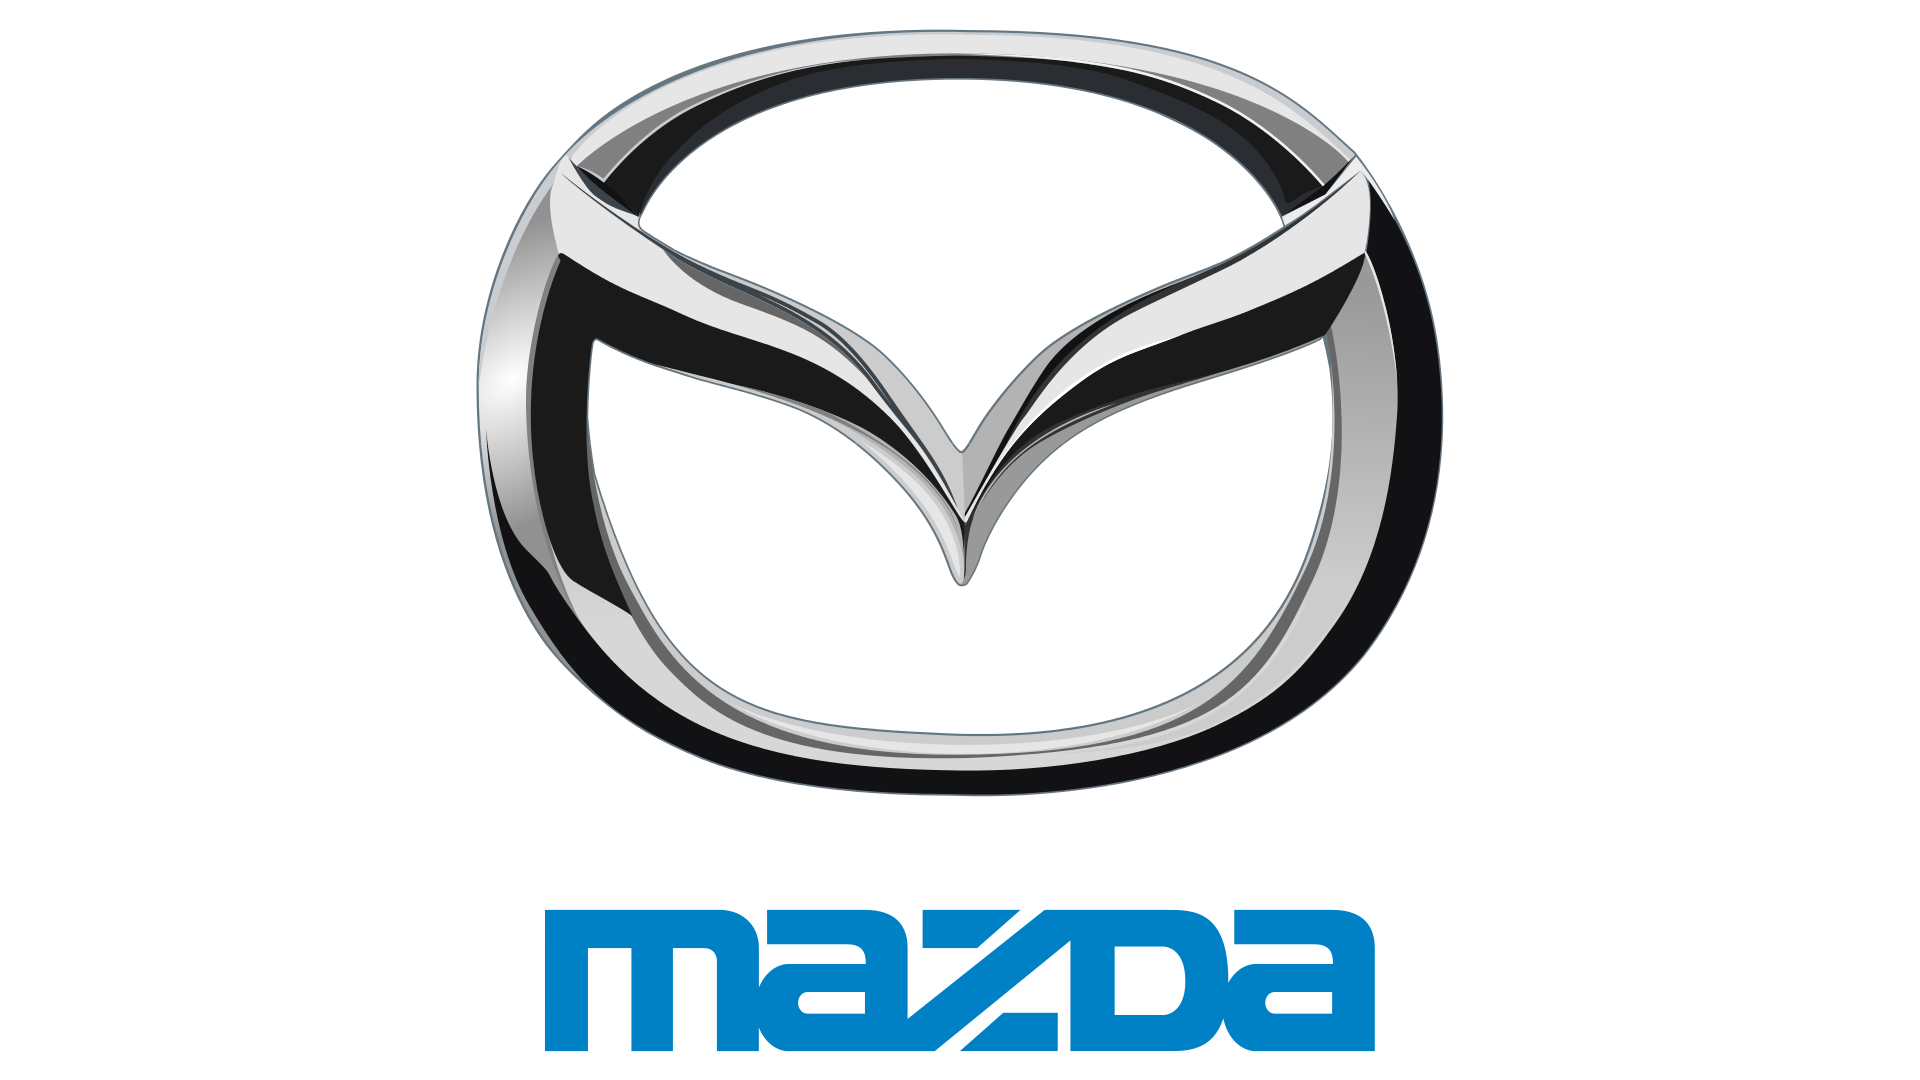 https://missglobal.com/wp-content/uploads/2018/05/Mazda-logo-1997-1920x1080.png